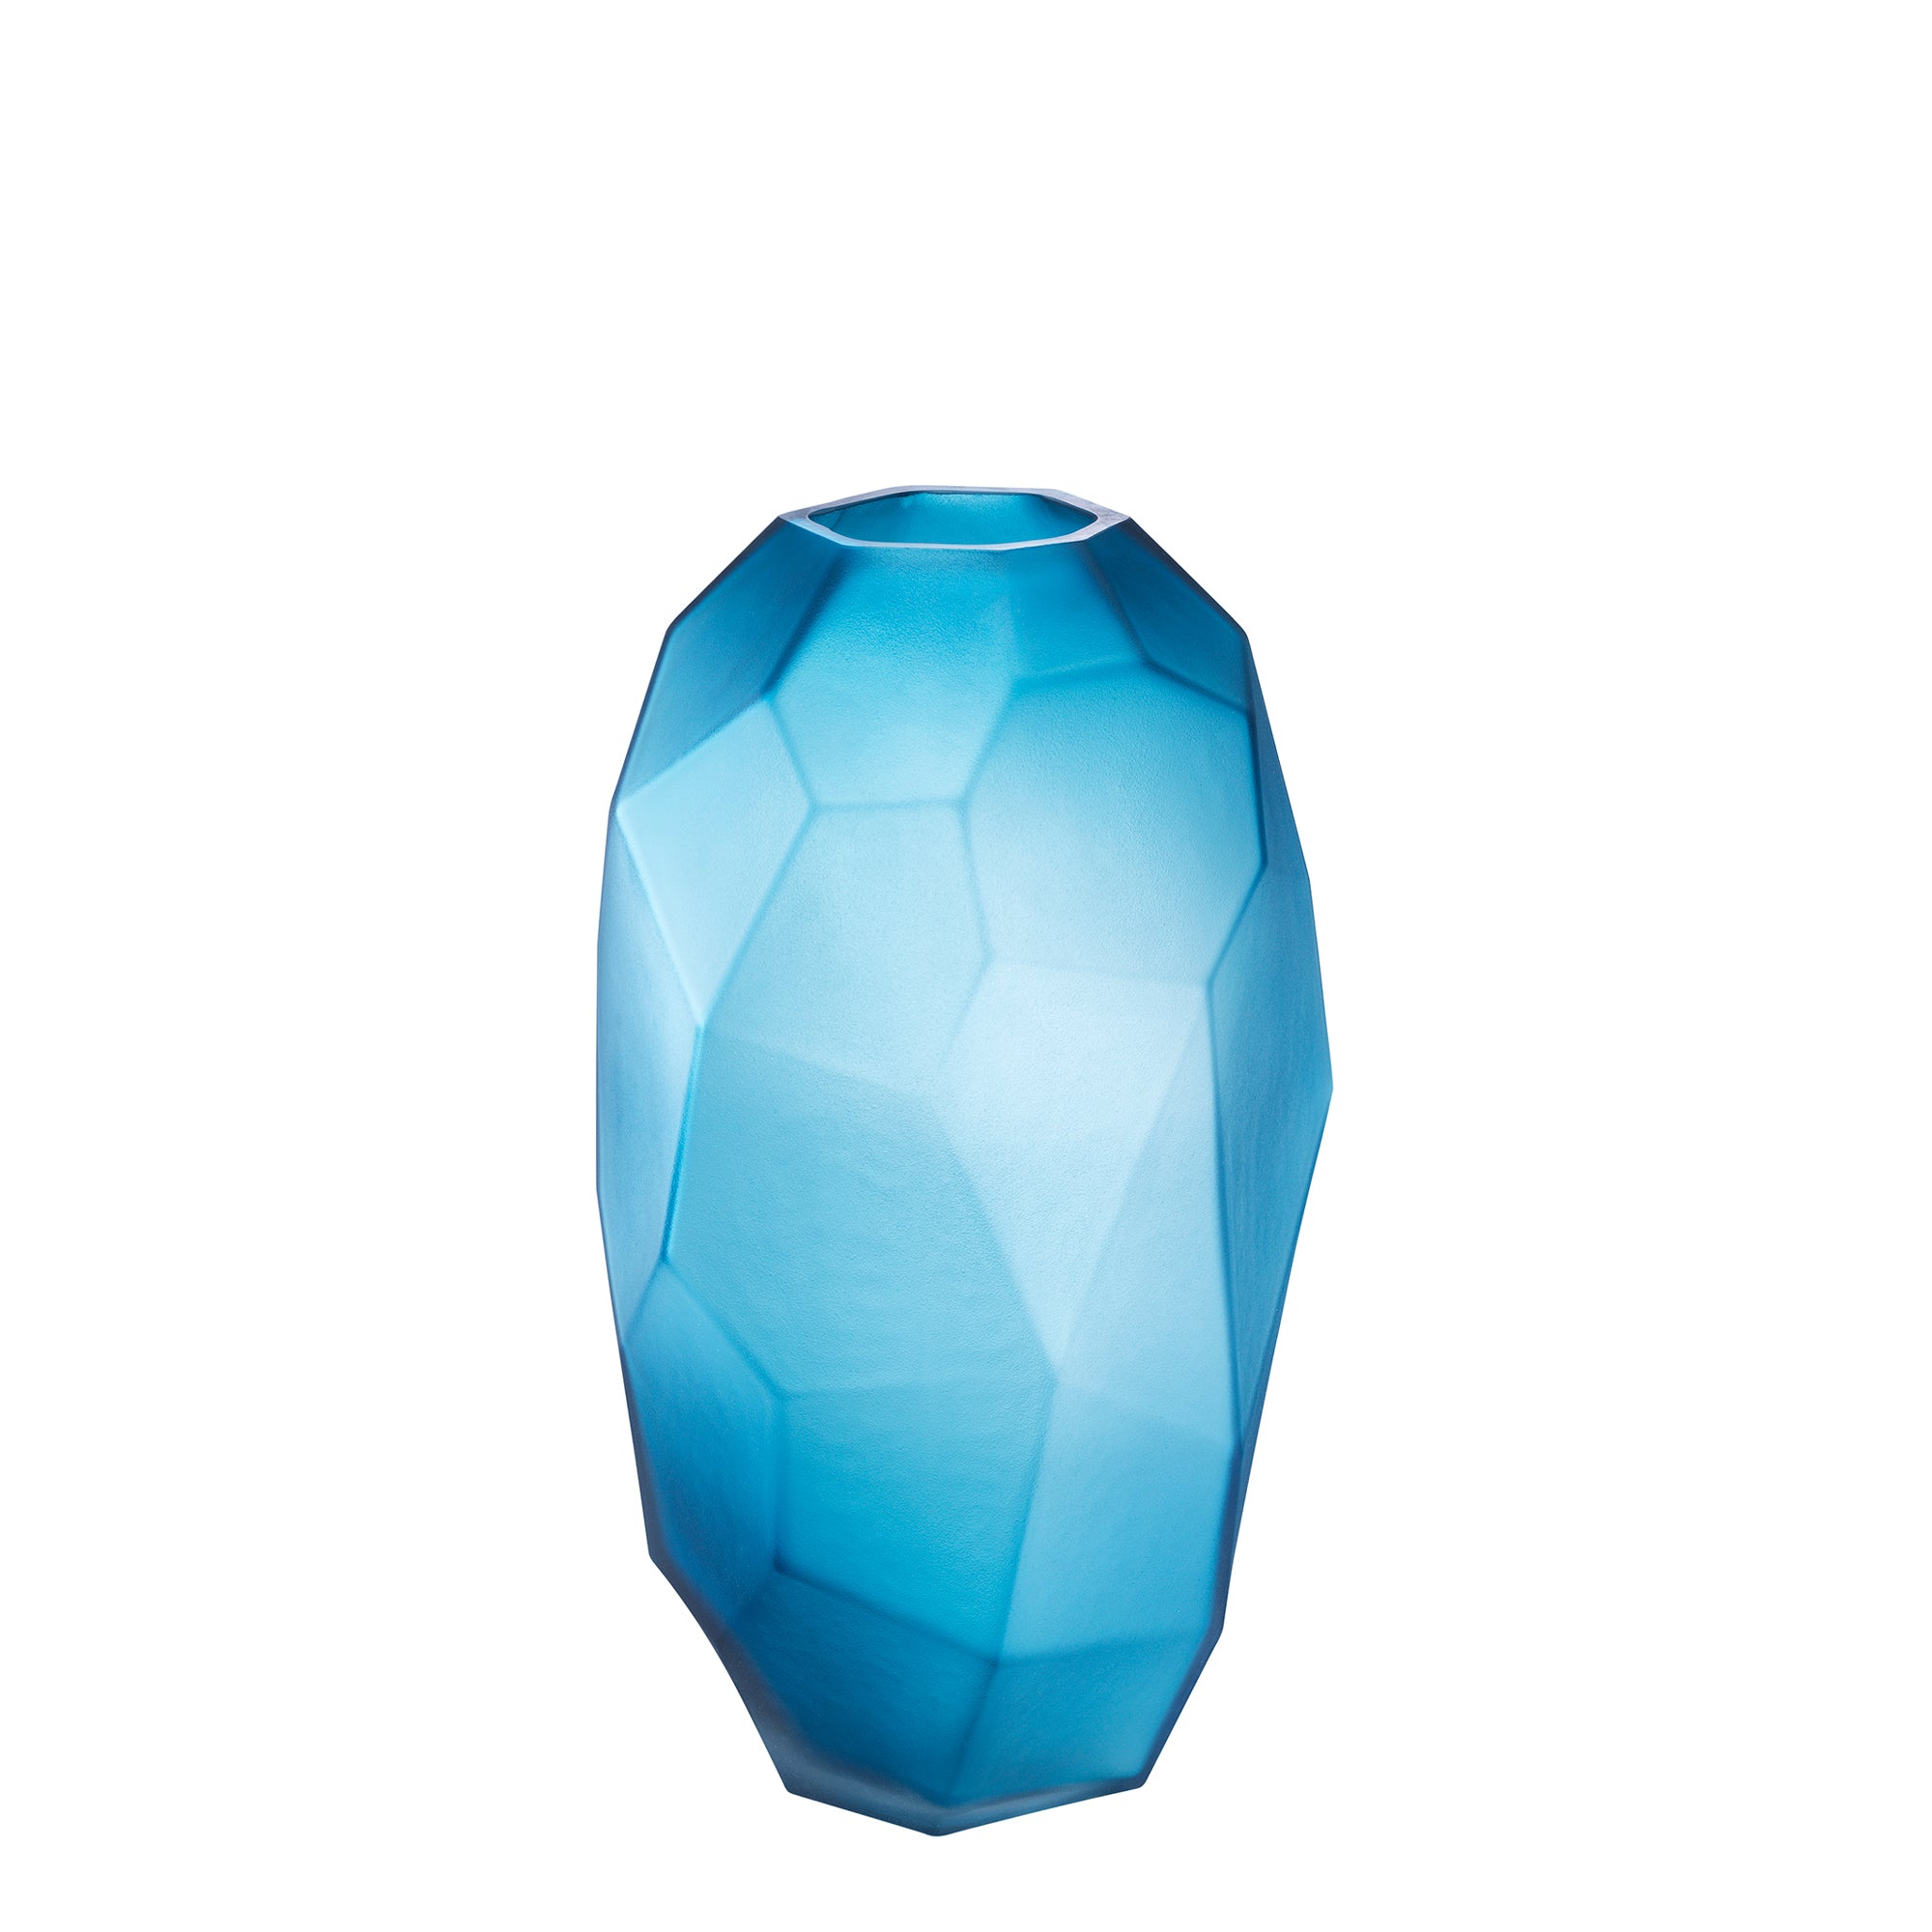 Eichholtz Fly - Large Vase Blue Glass